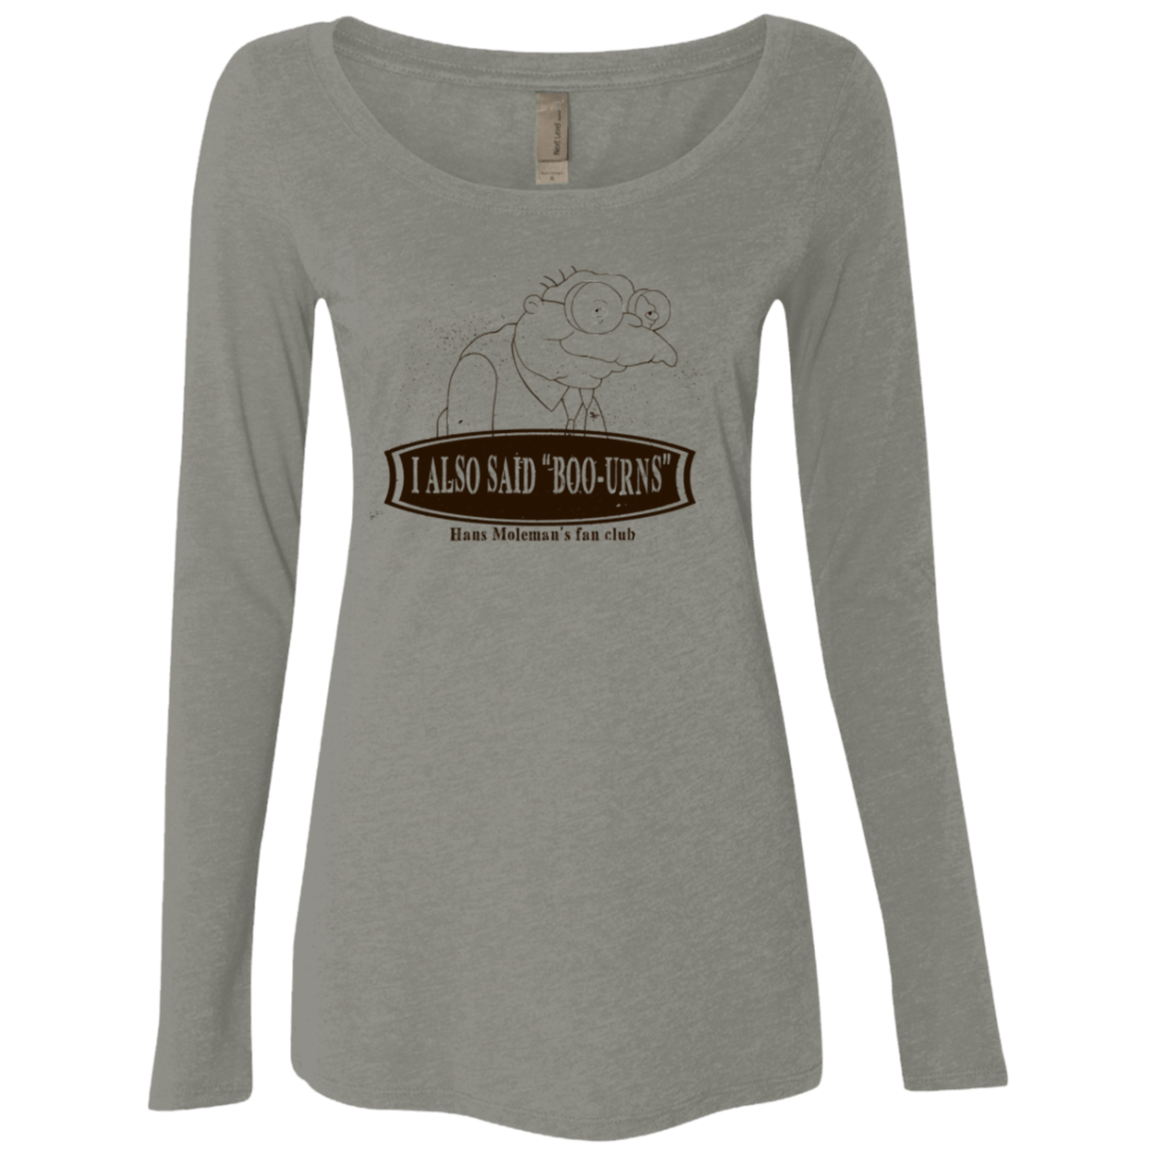 T-Shirts Venetian Grey / Small Hans Moleman Fans Club Women's Triblend Long Sleeve Shirt